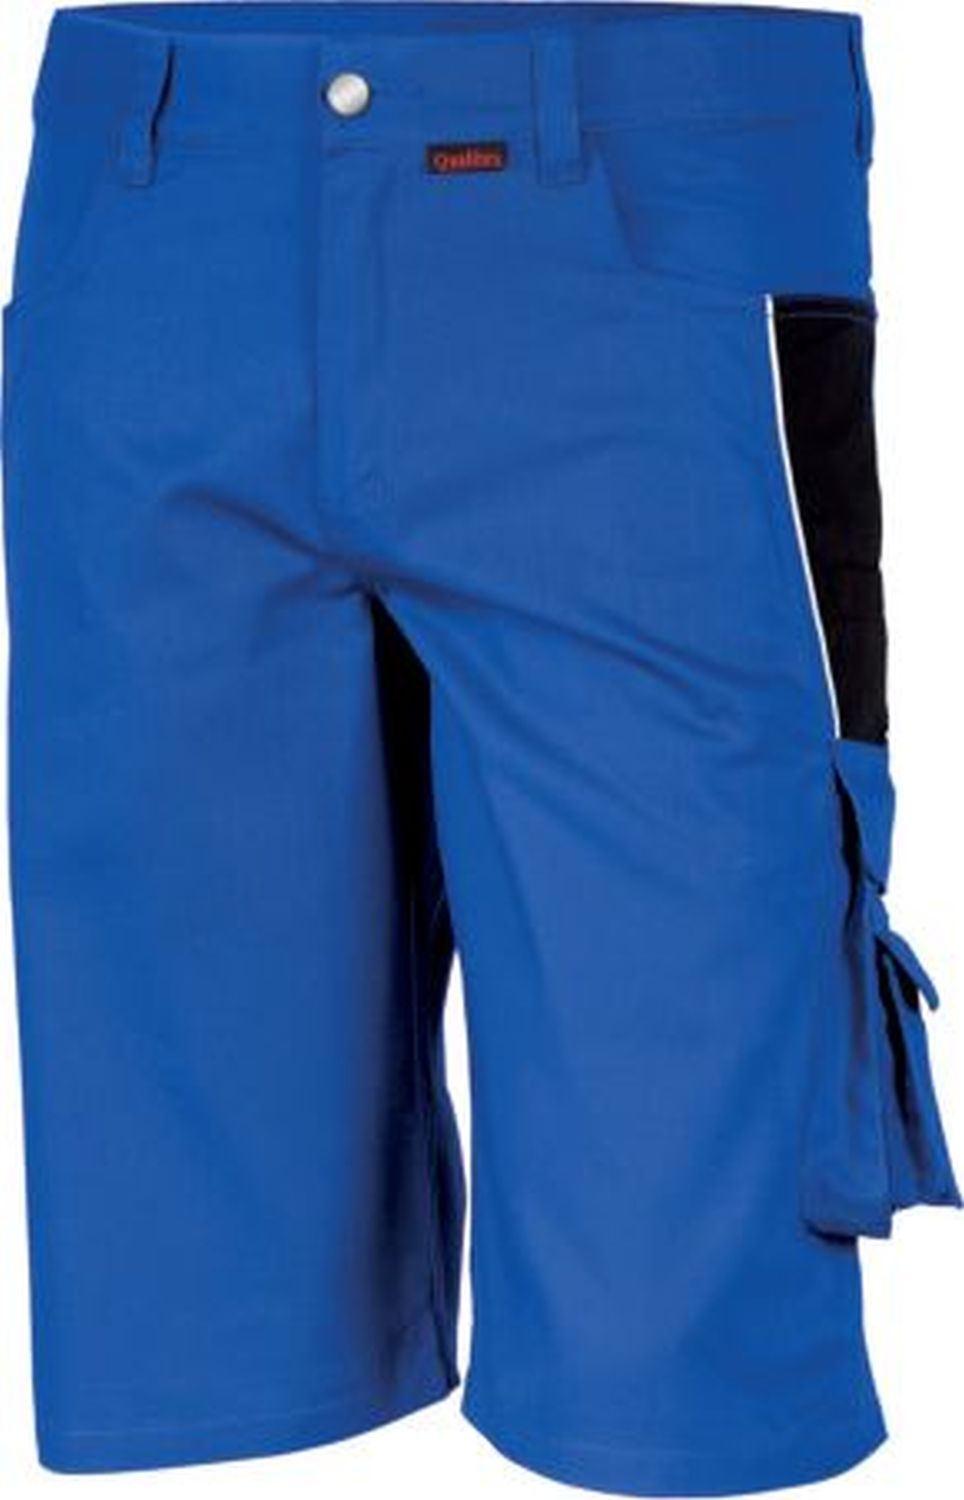 GON Shorts 600103027 - Größe 52, kornblau/schwarz